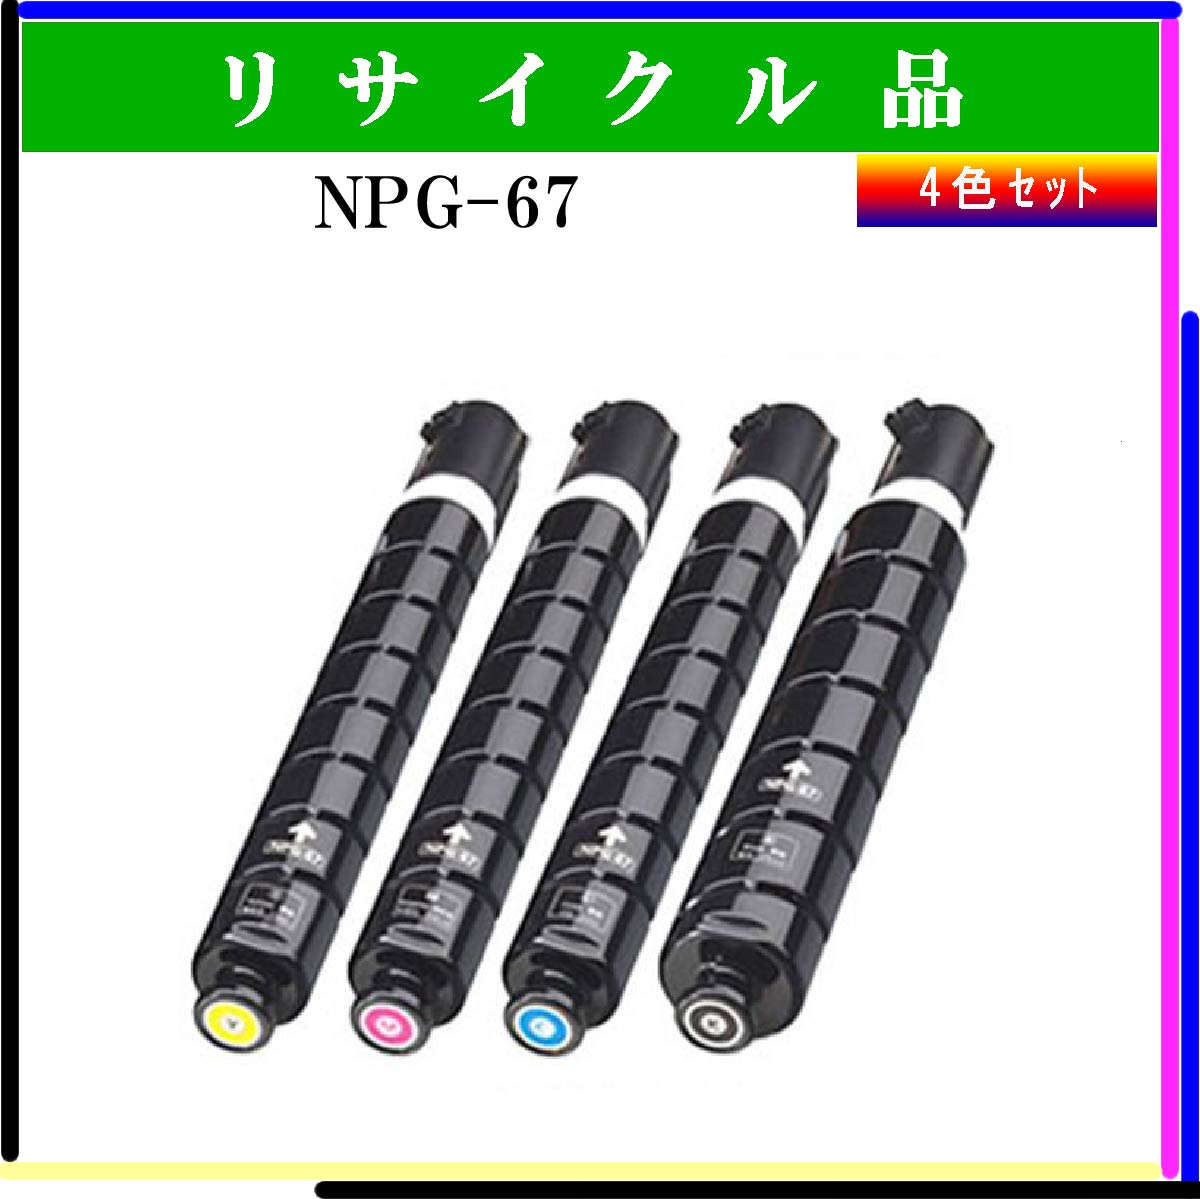 NPG-67 (4色ｾｯﾄ)